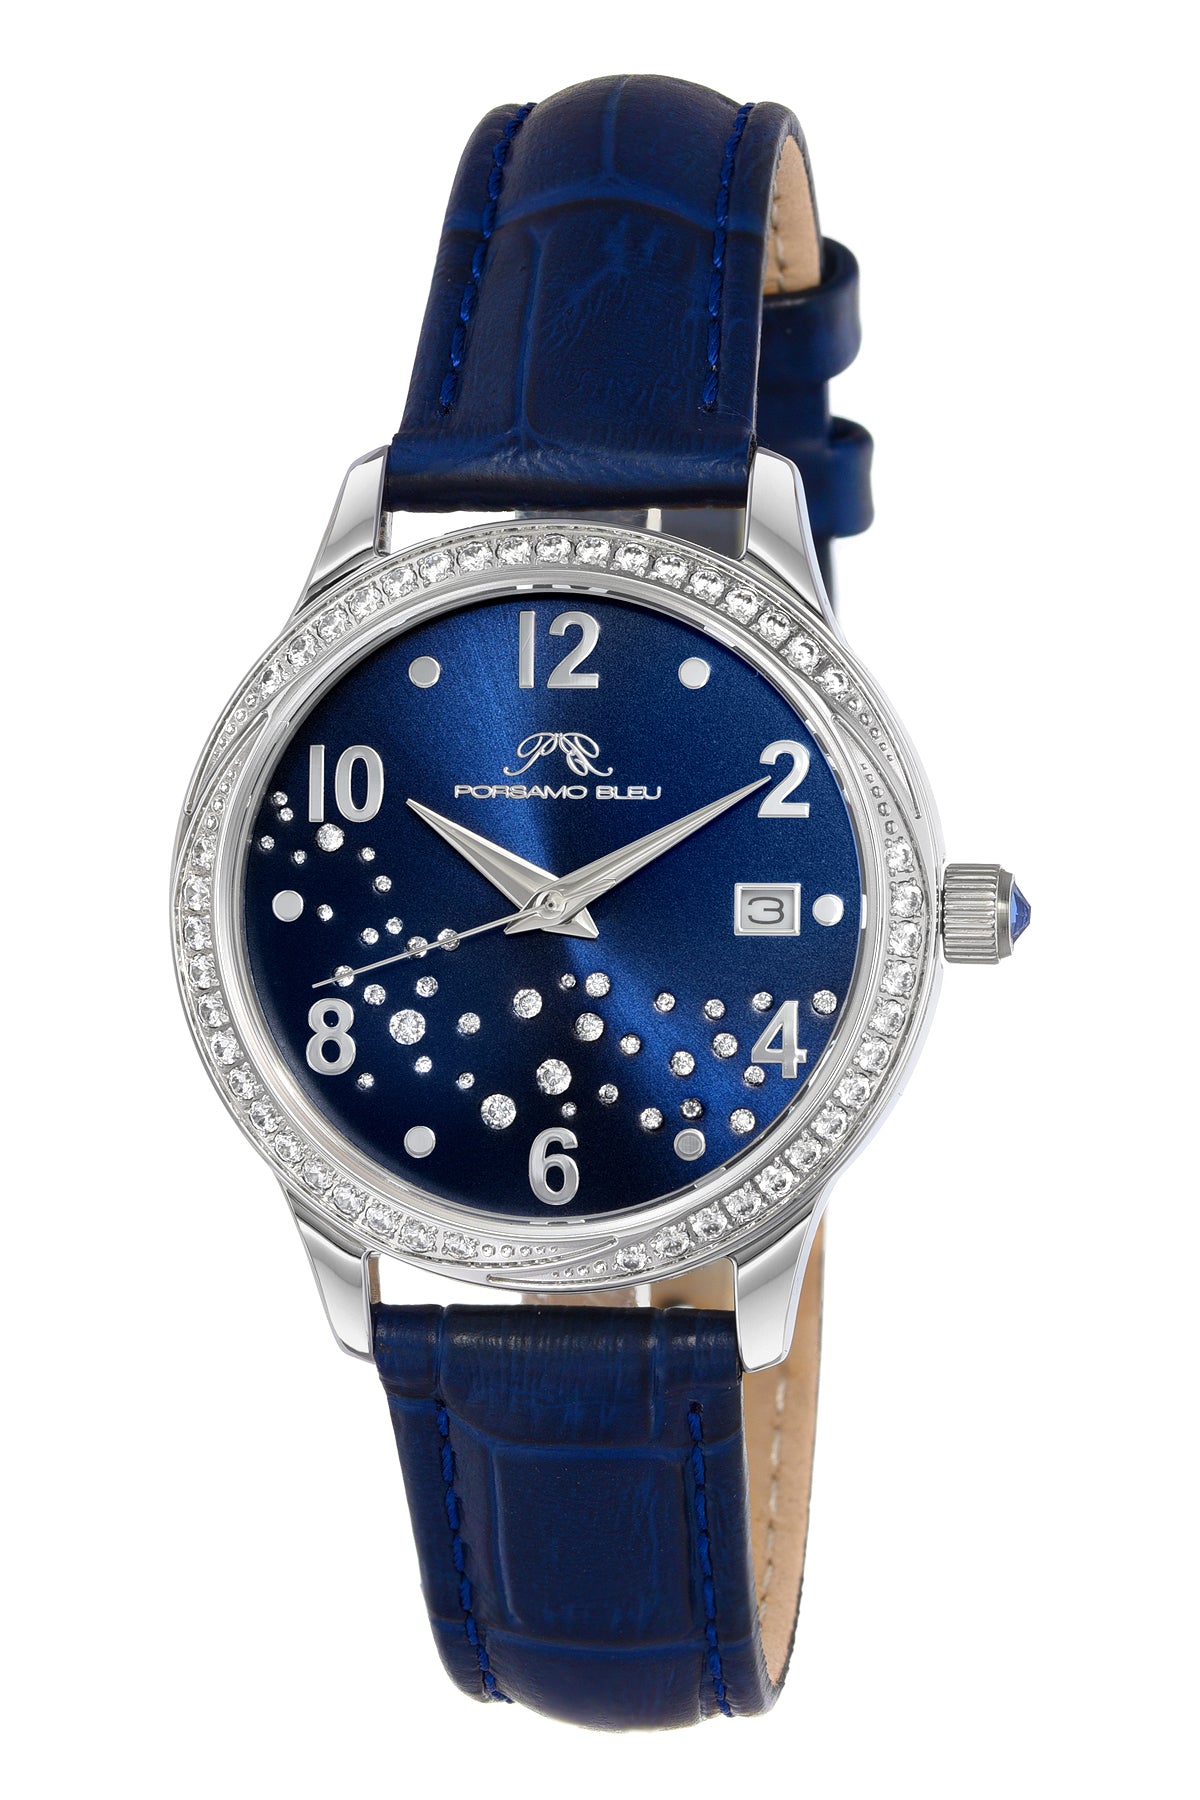 Porsamo Bleu Ruby Luxury Women's Genuine Leather Band Watch, Silver, Blue 1142ARUL